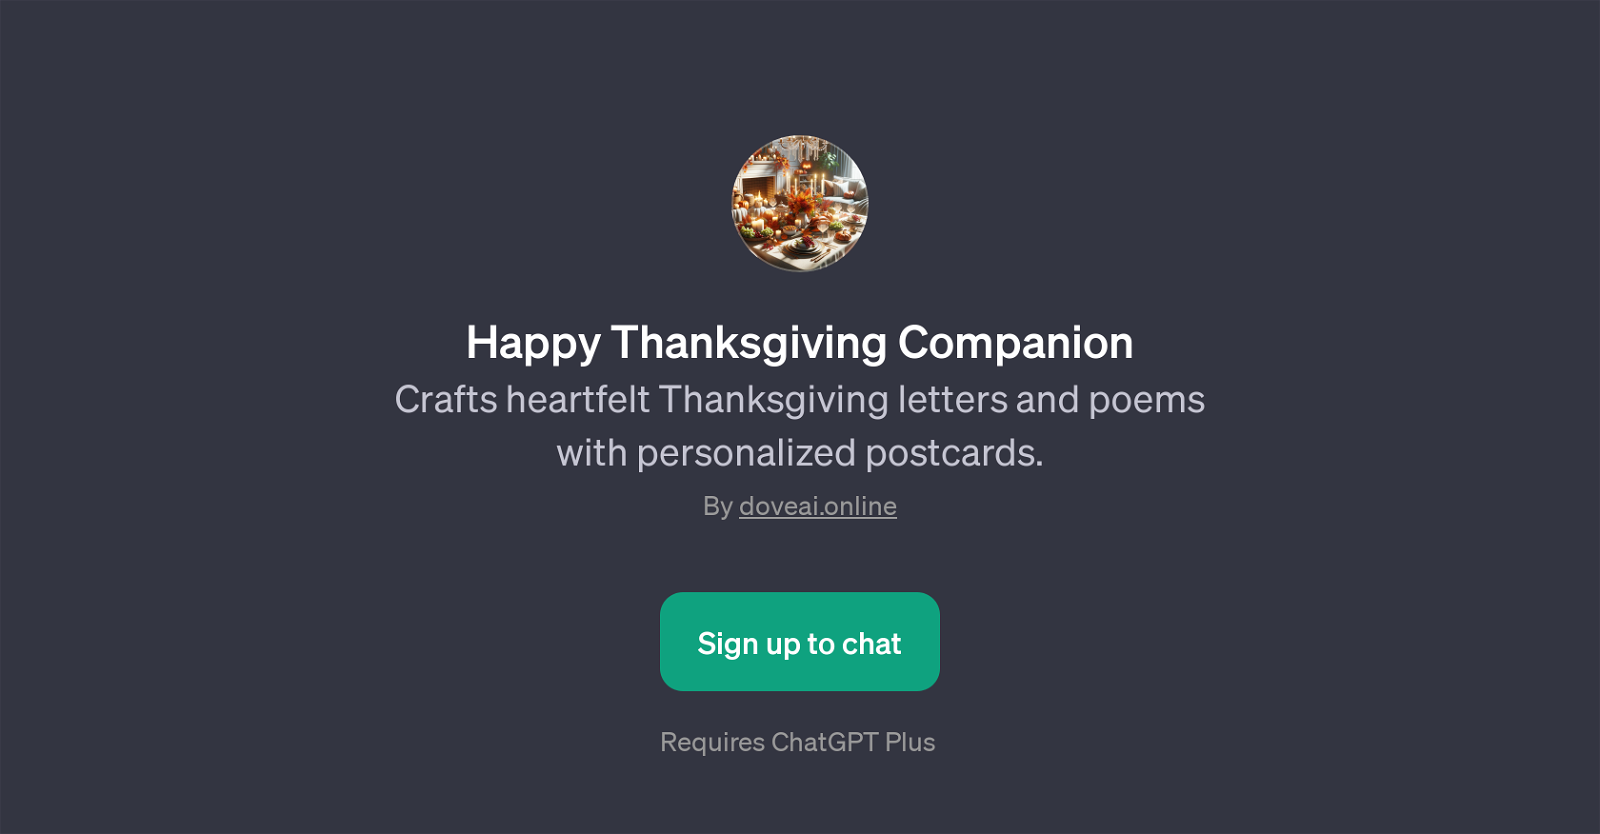 Happy Thanksgiving Companion website